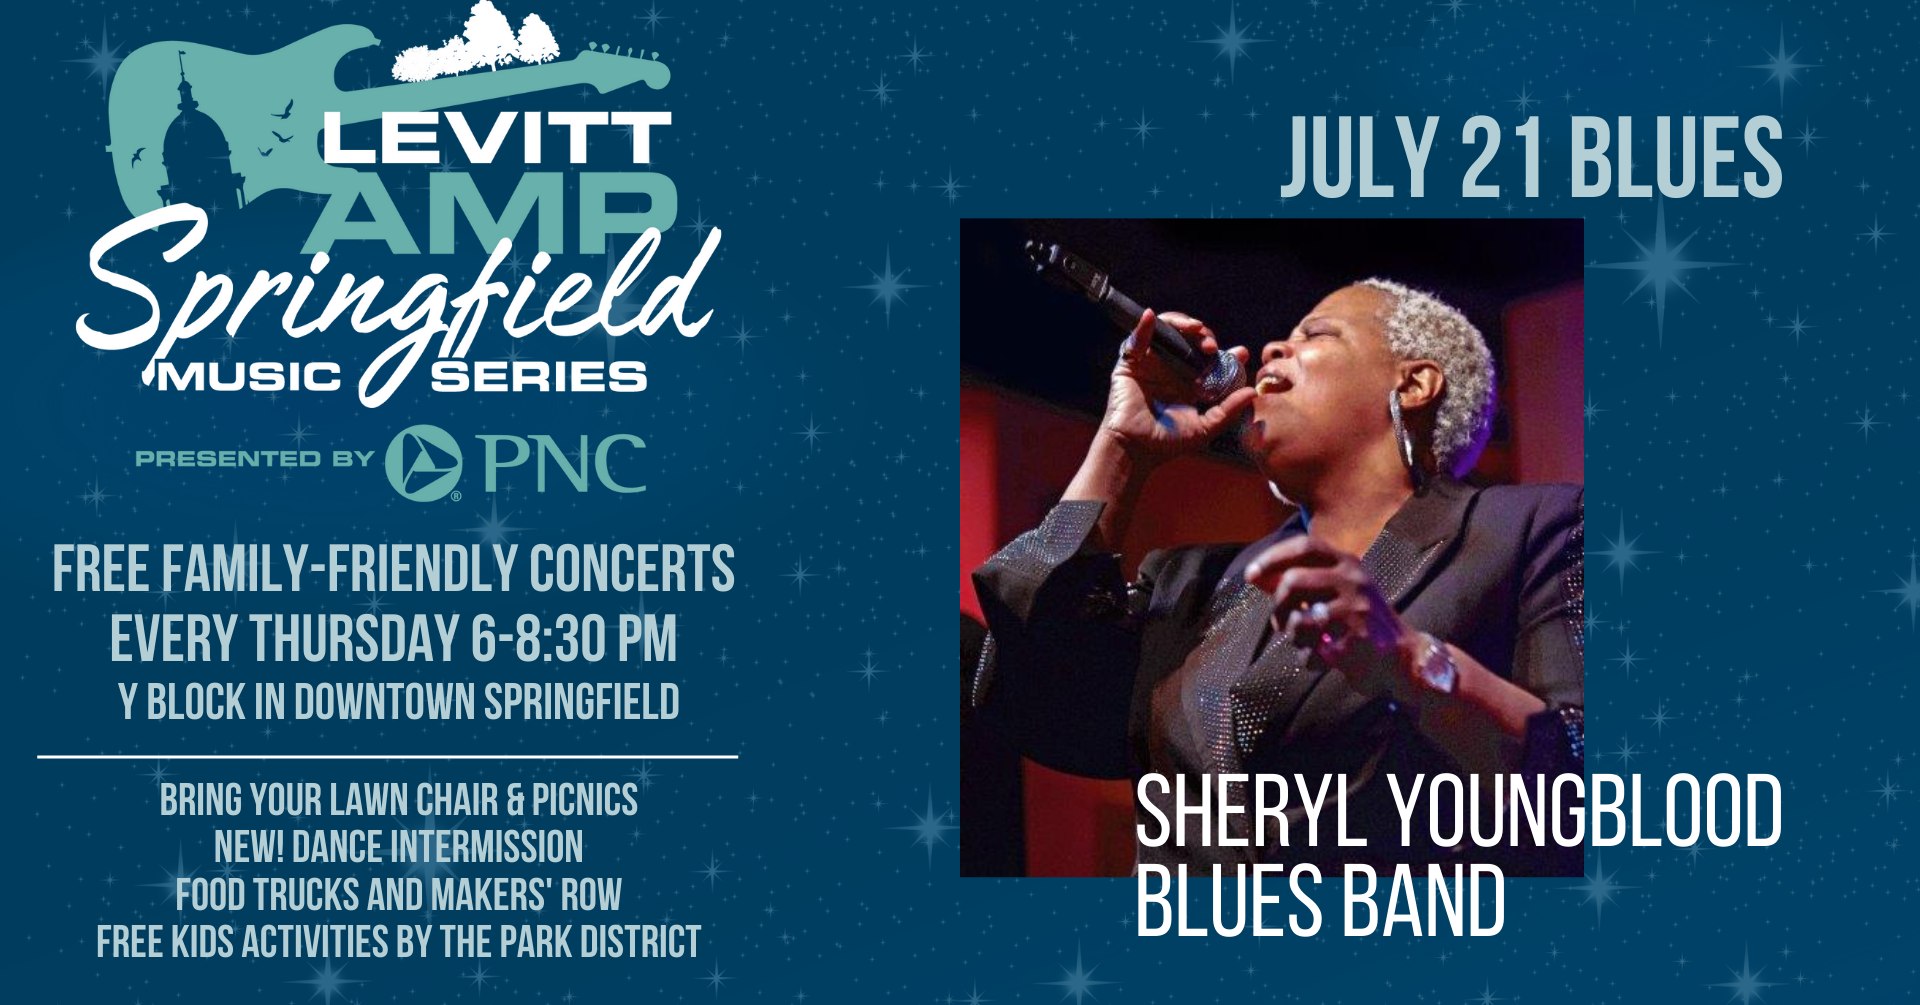 July 21 Blues Sheryl Youngblood Blues Band